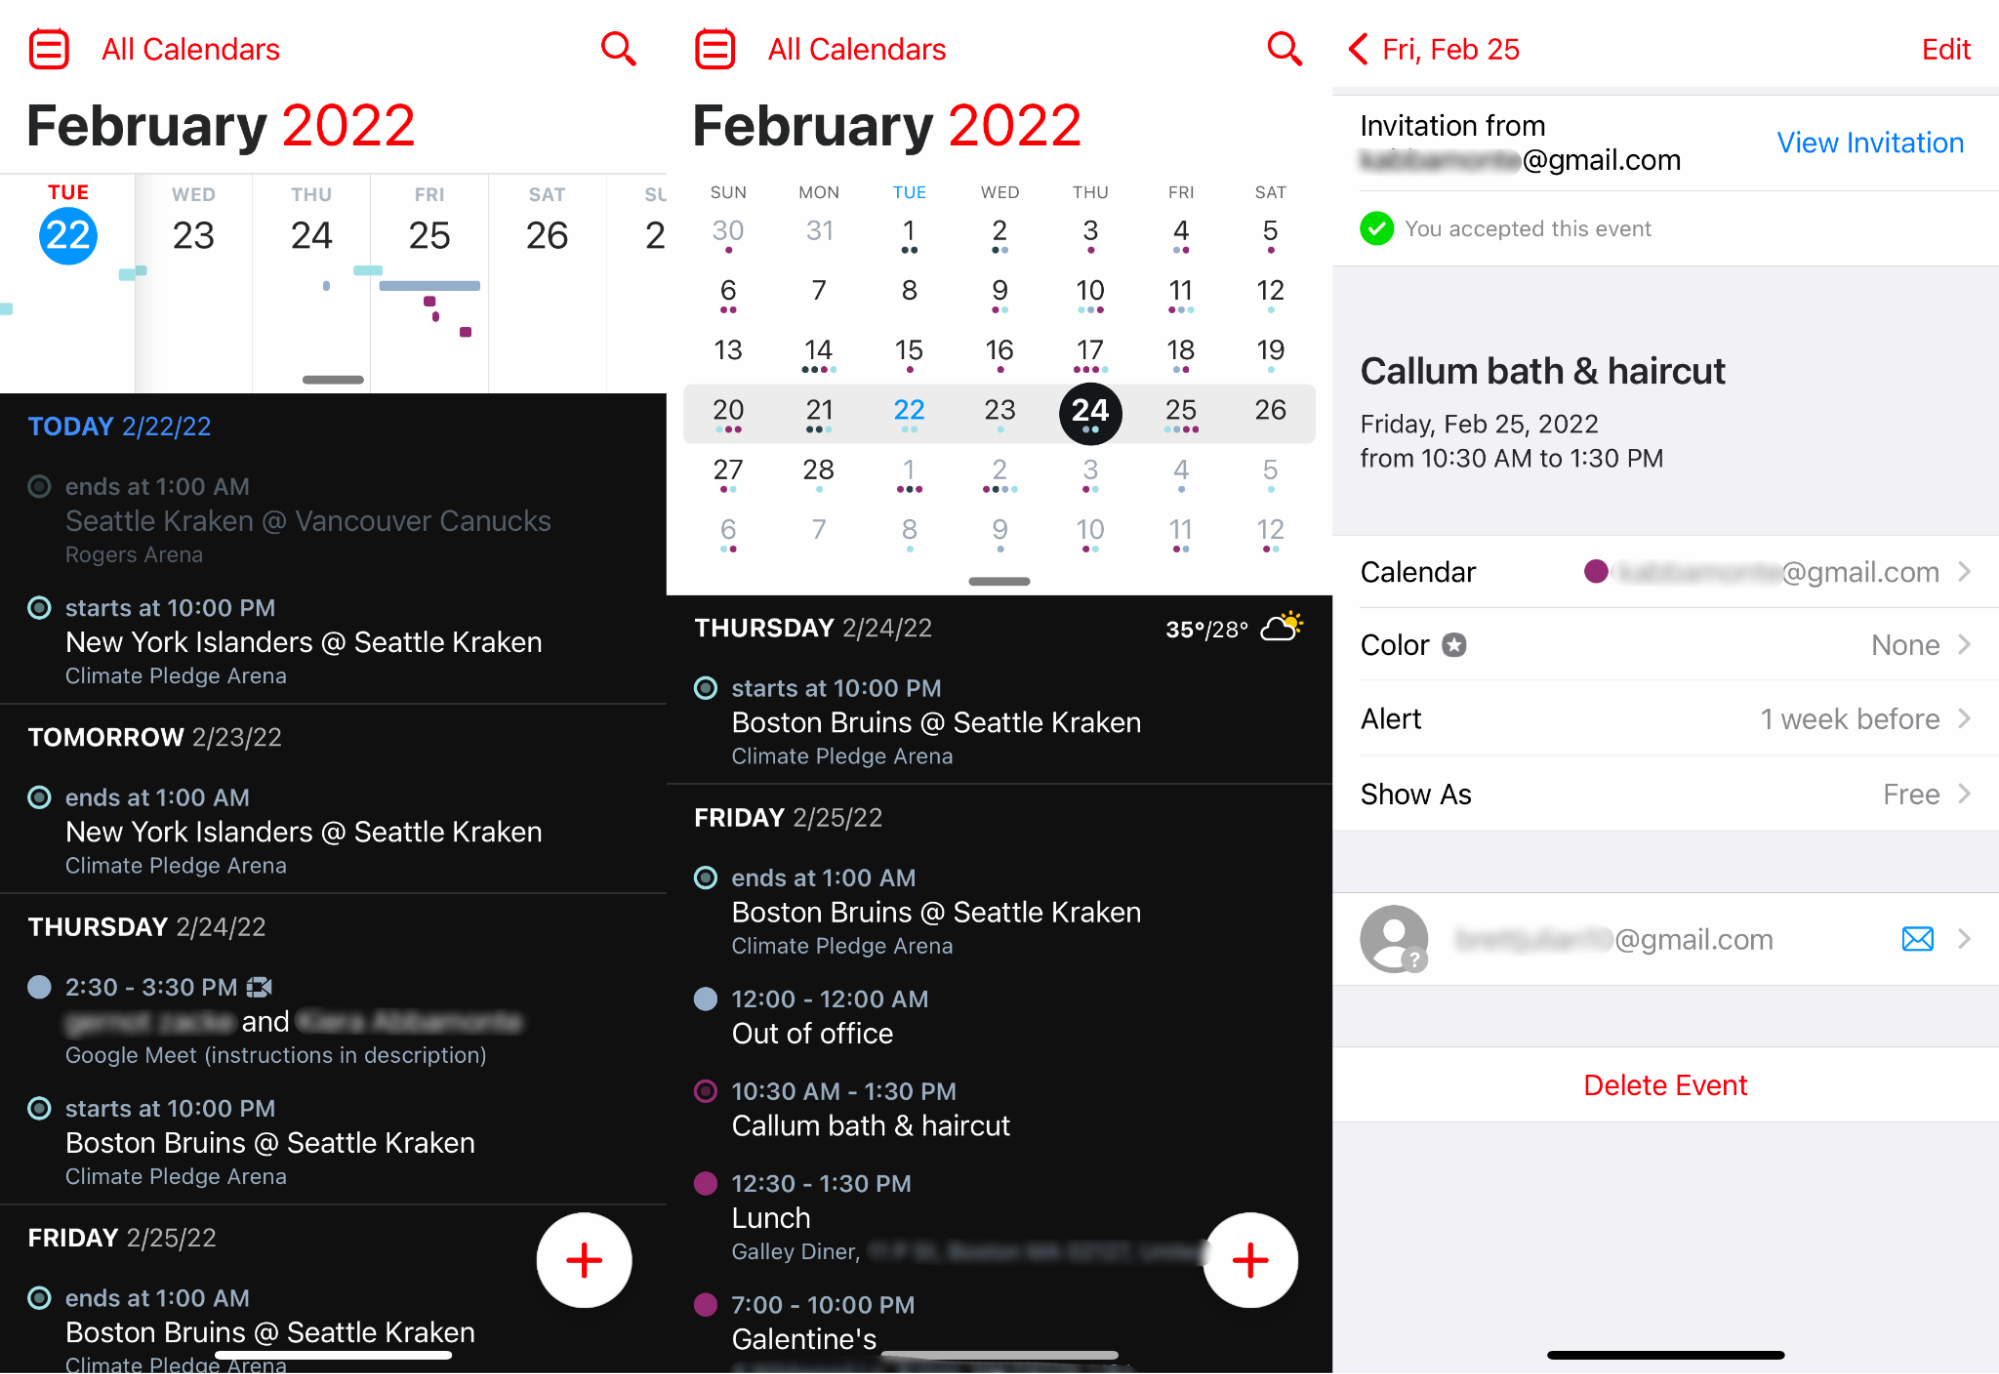 free ipad calendar app that sends notifications